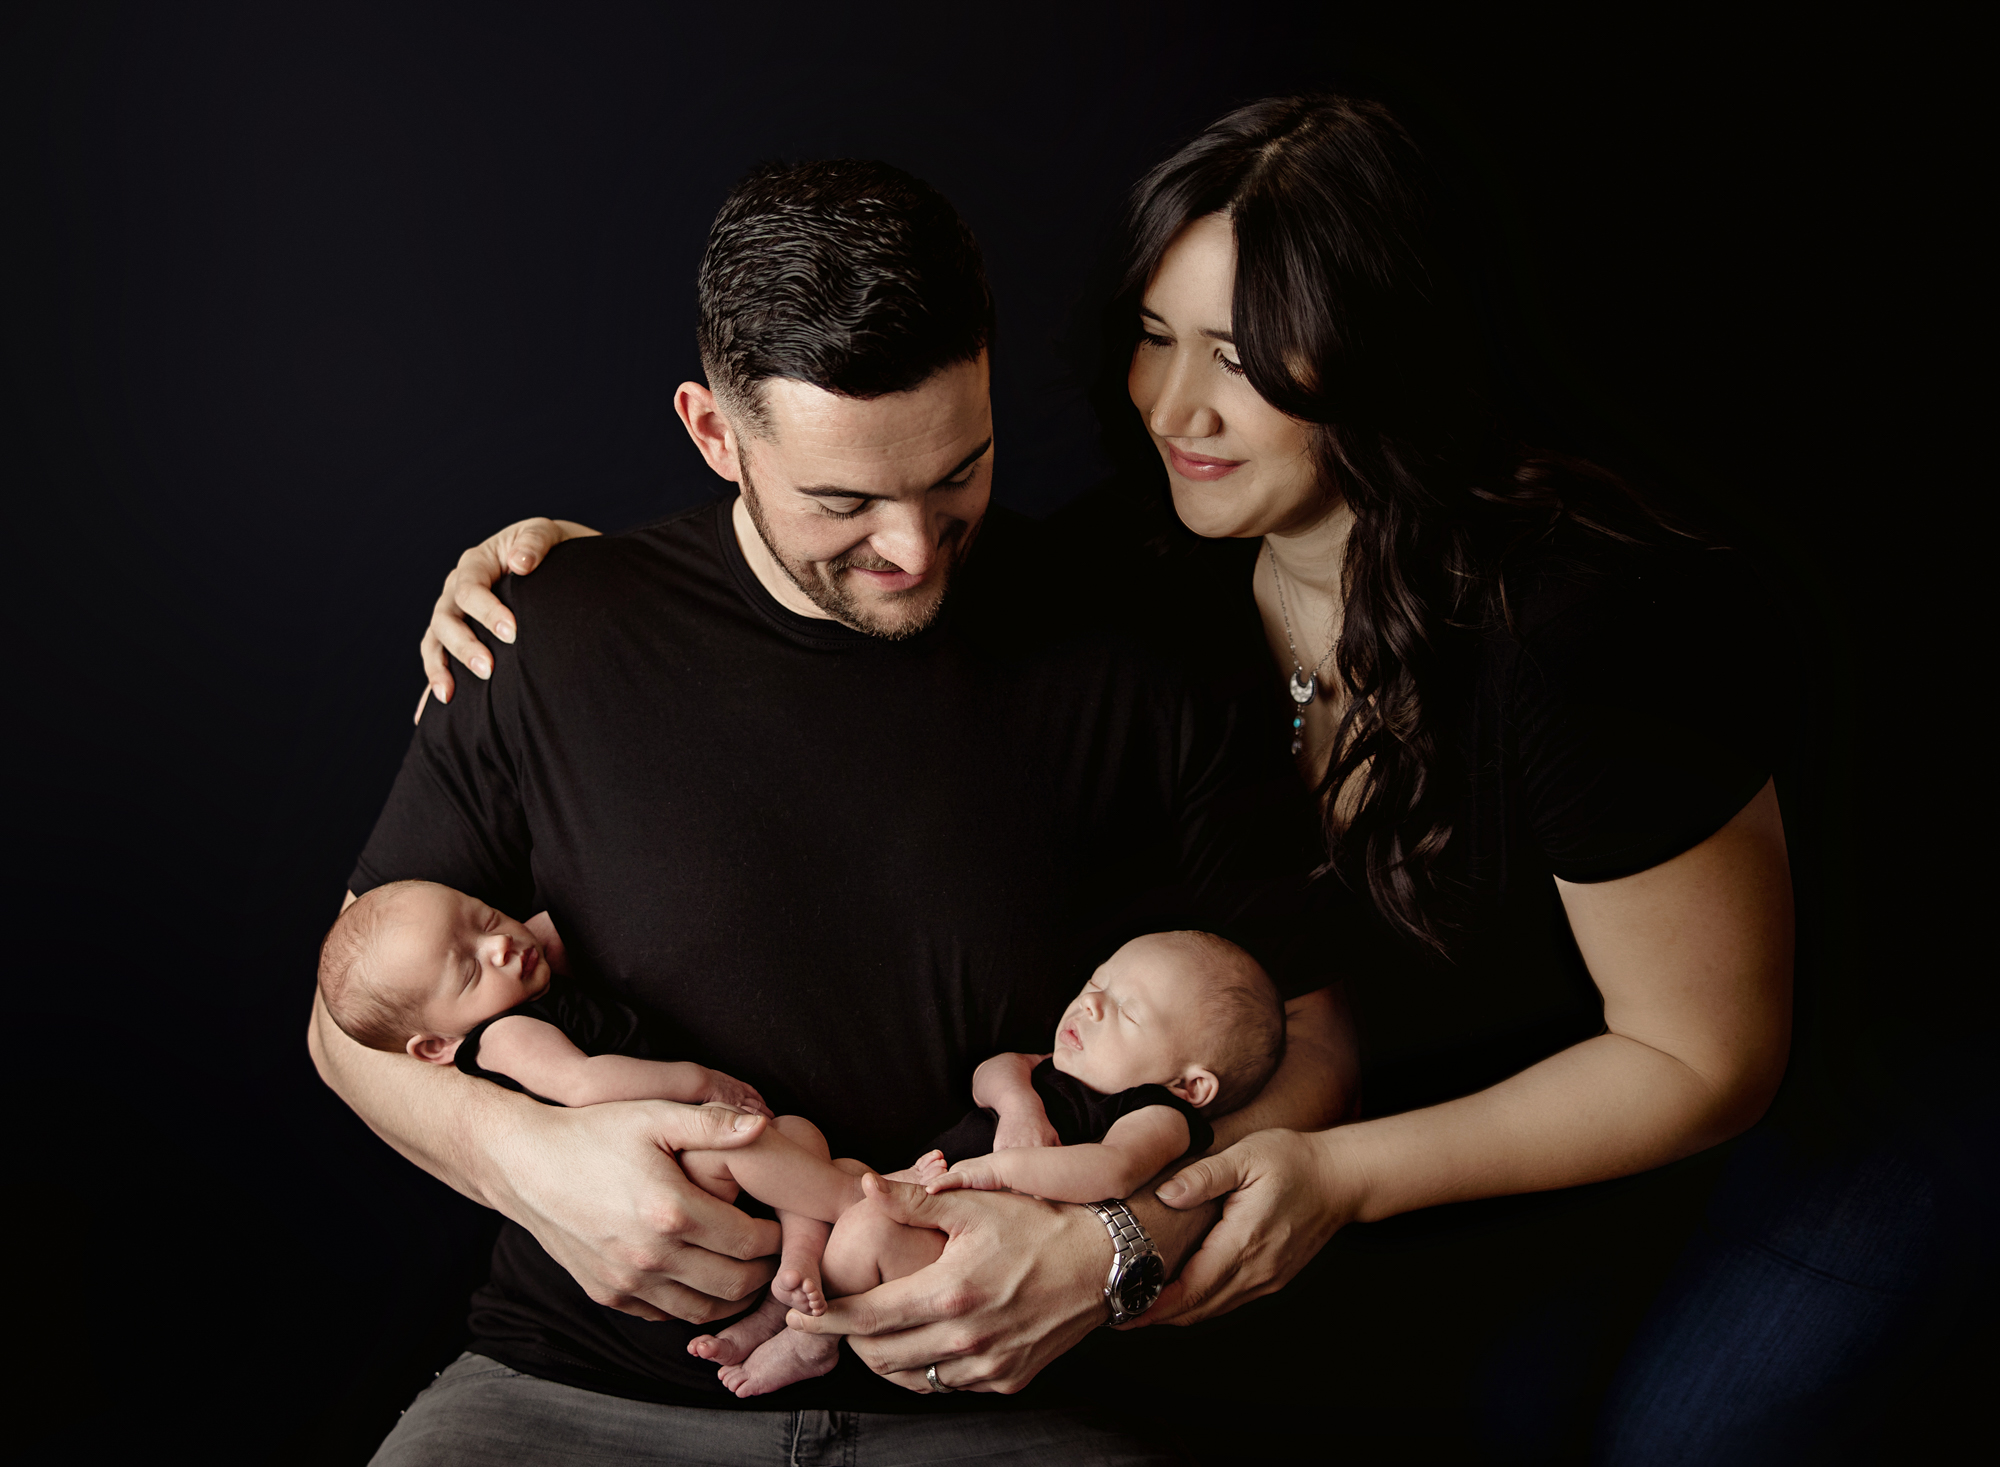 newborn family photos